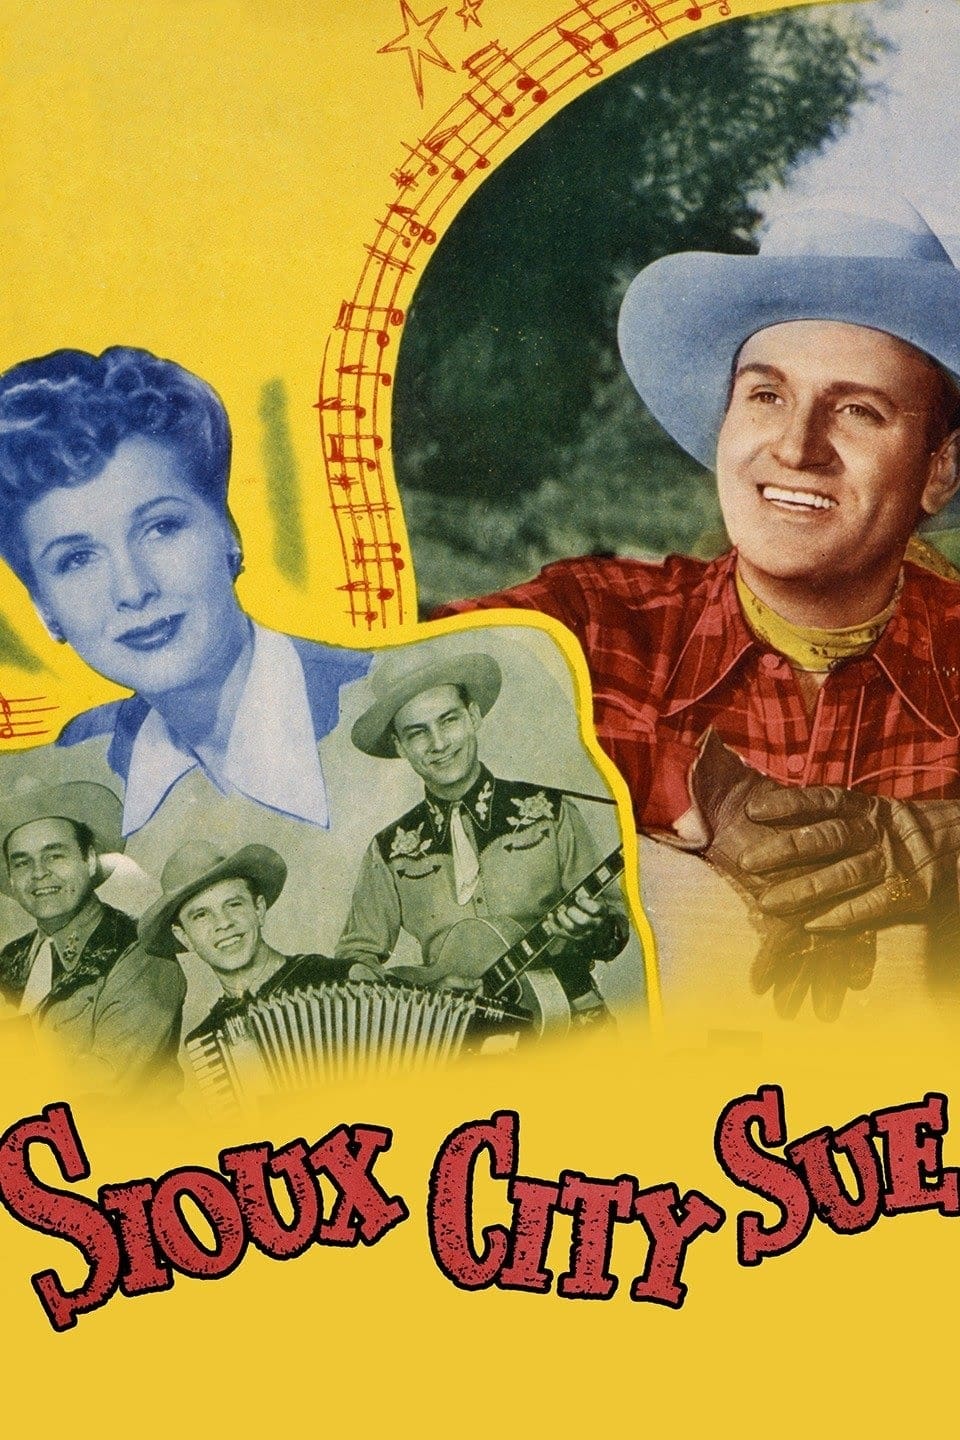 Sioux City Sue (1946)